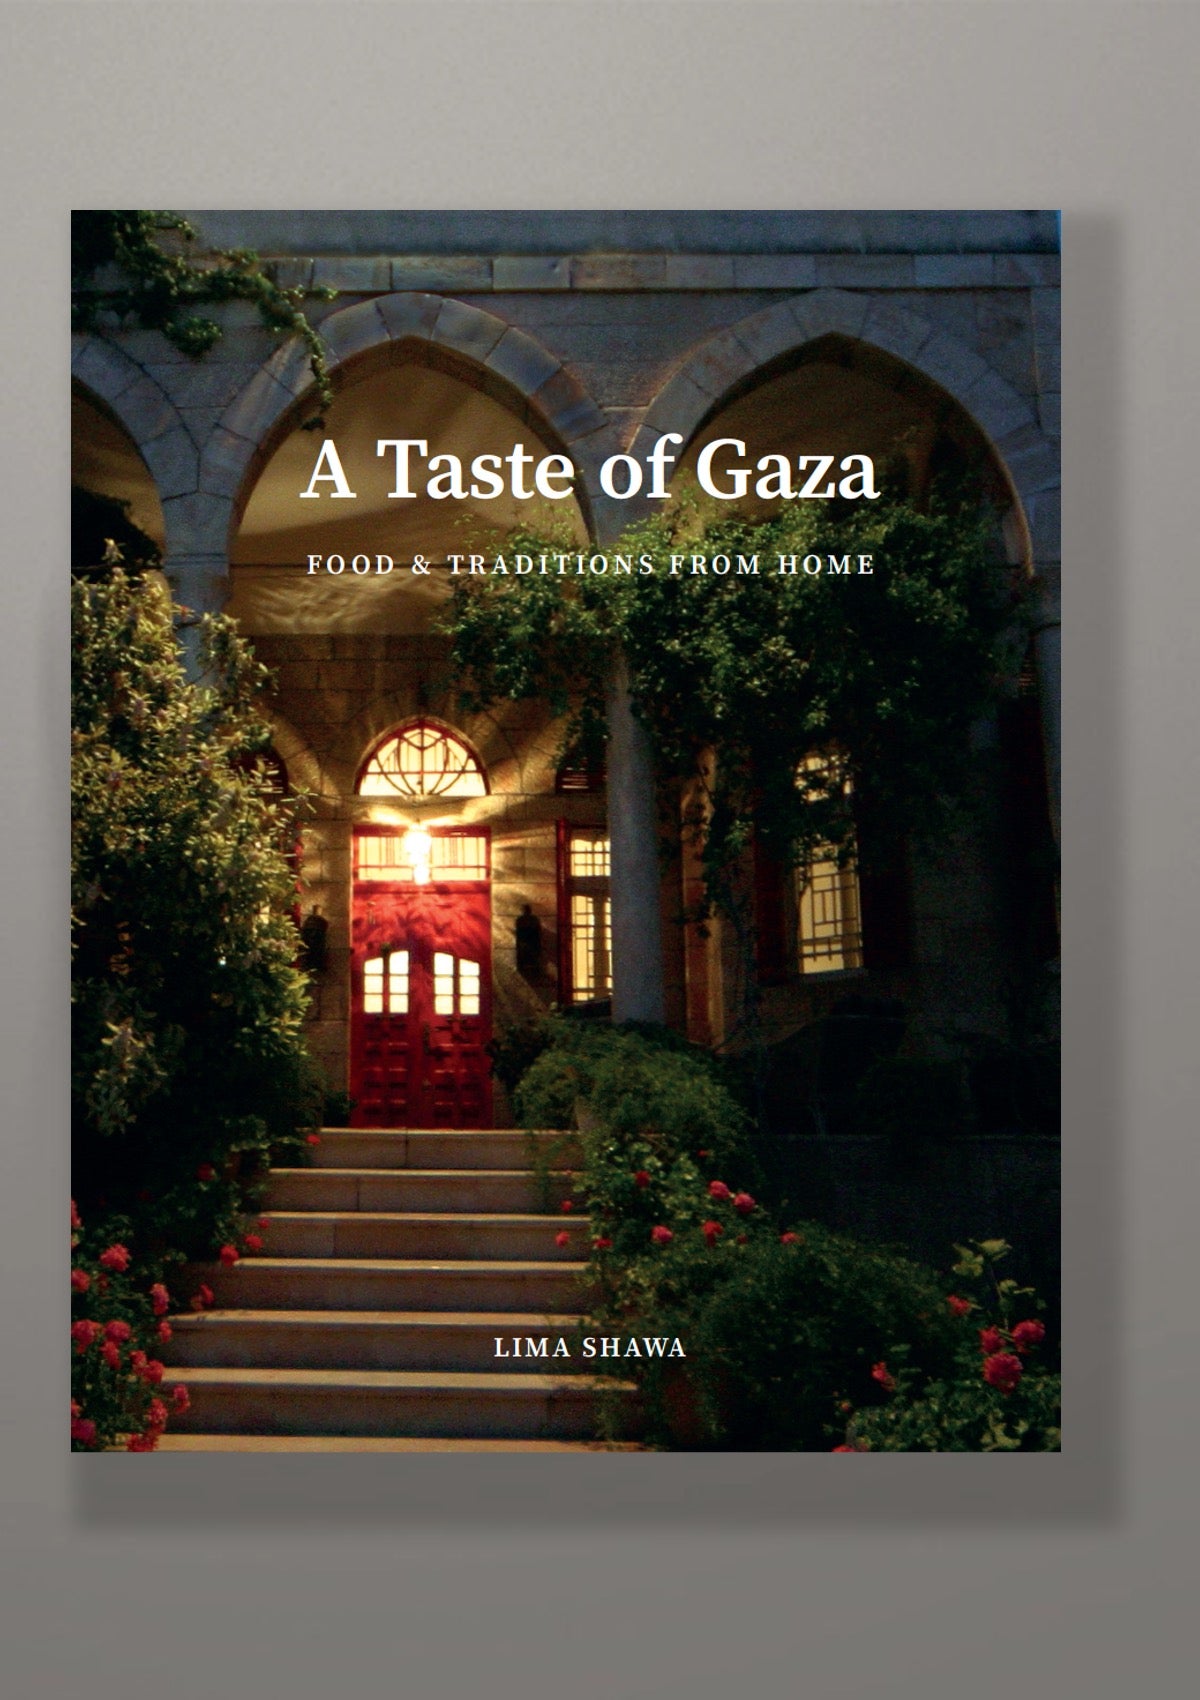 A Taste of Gaza